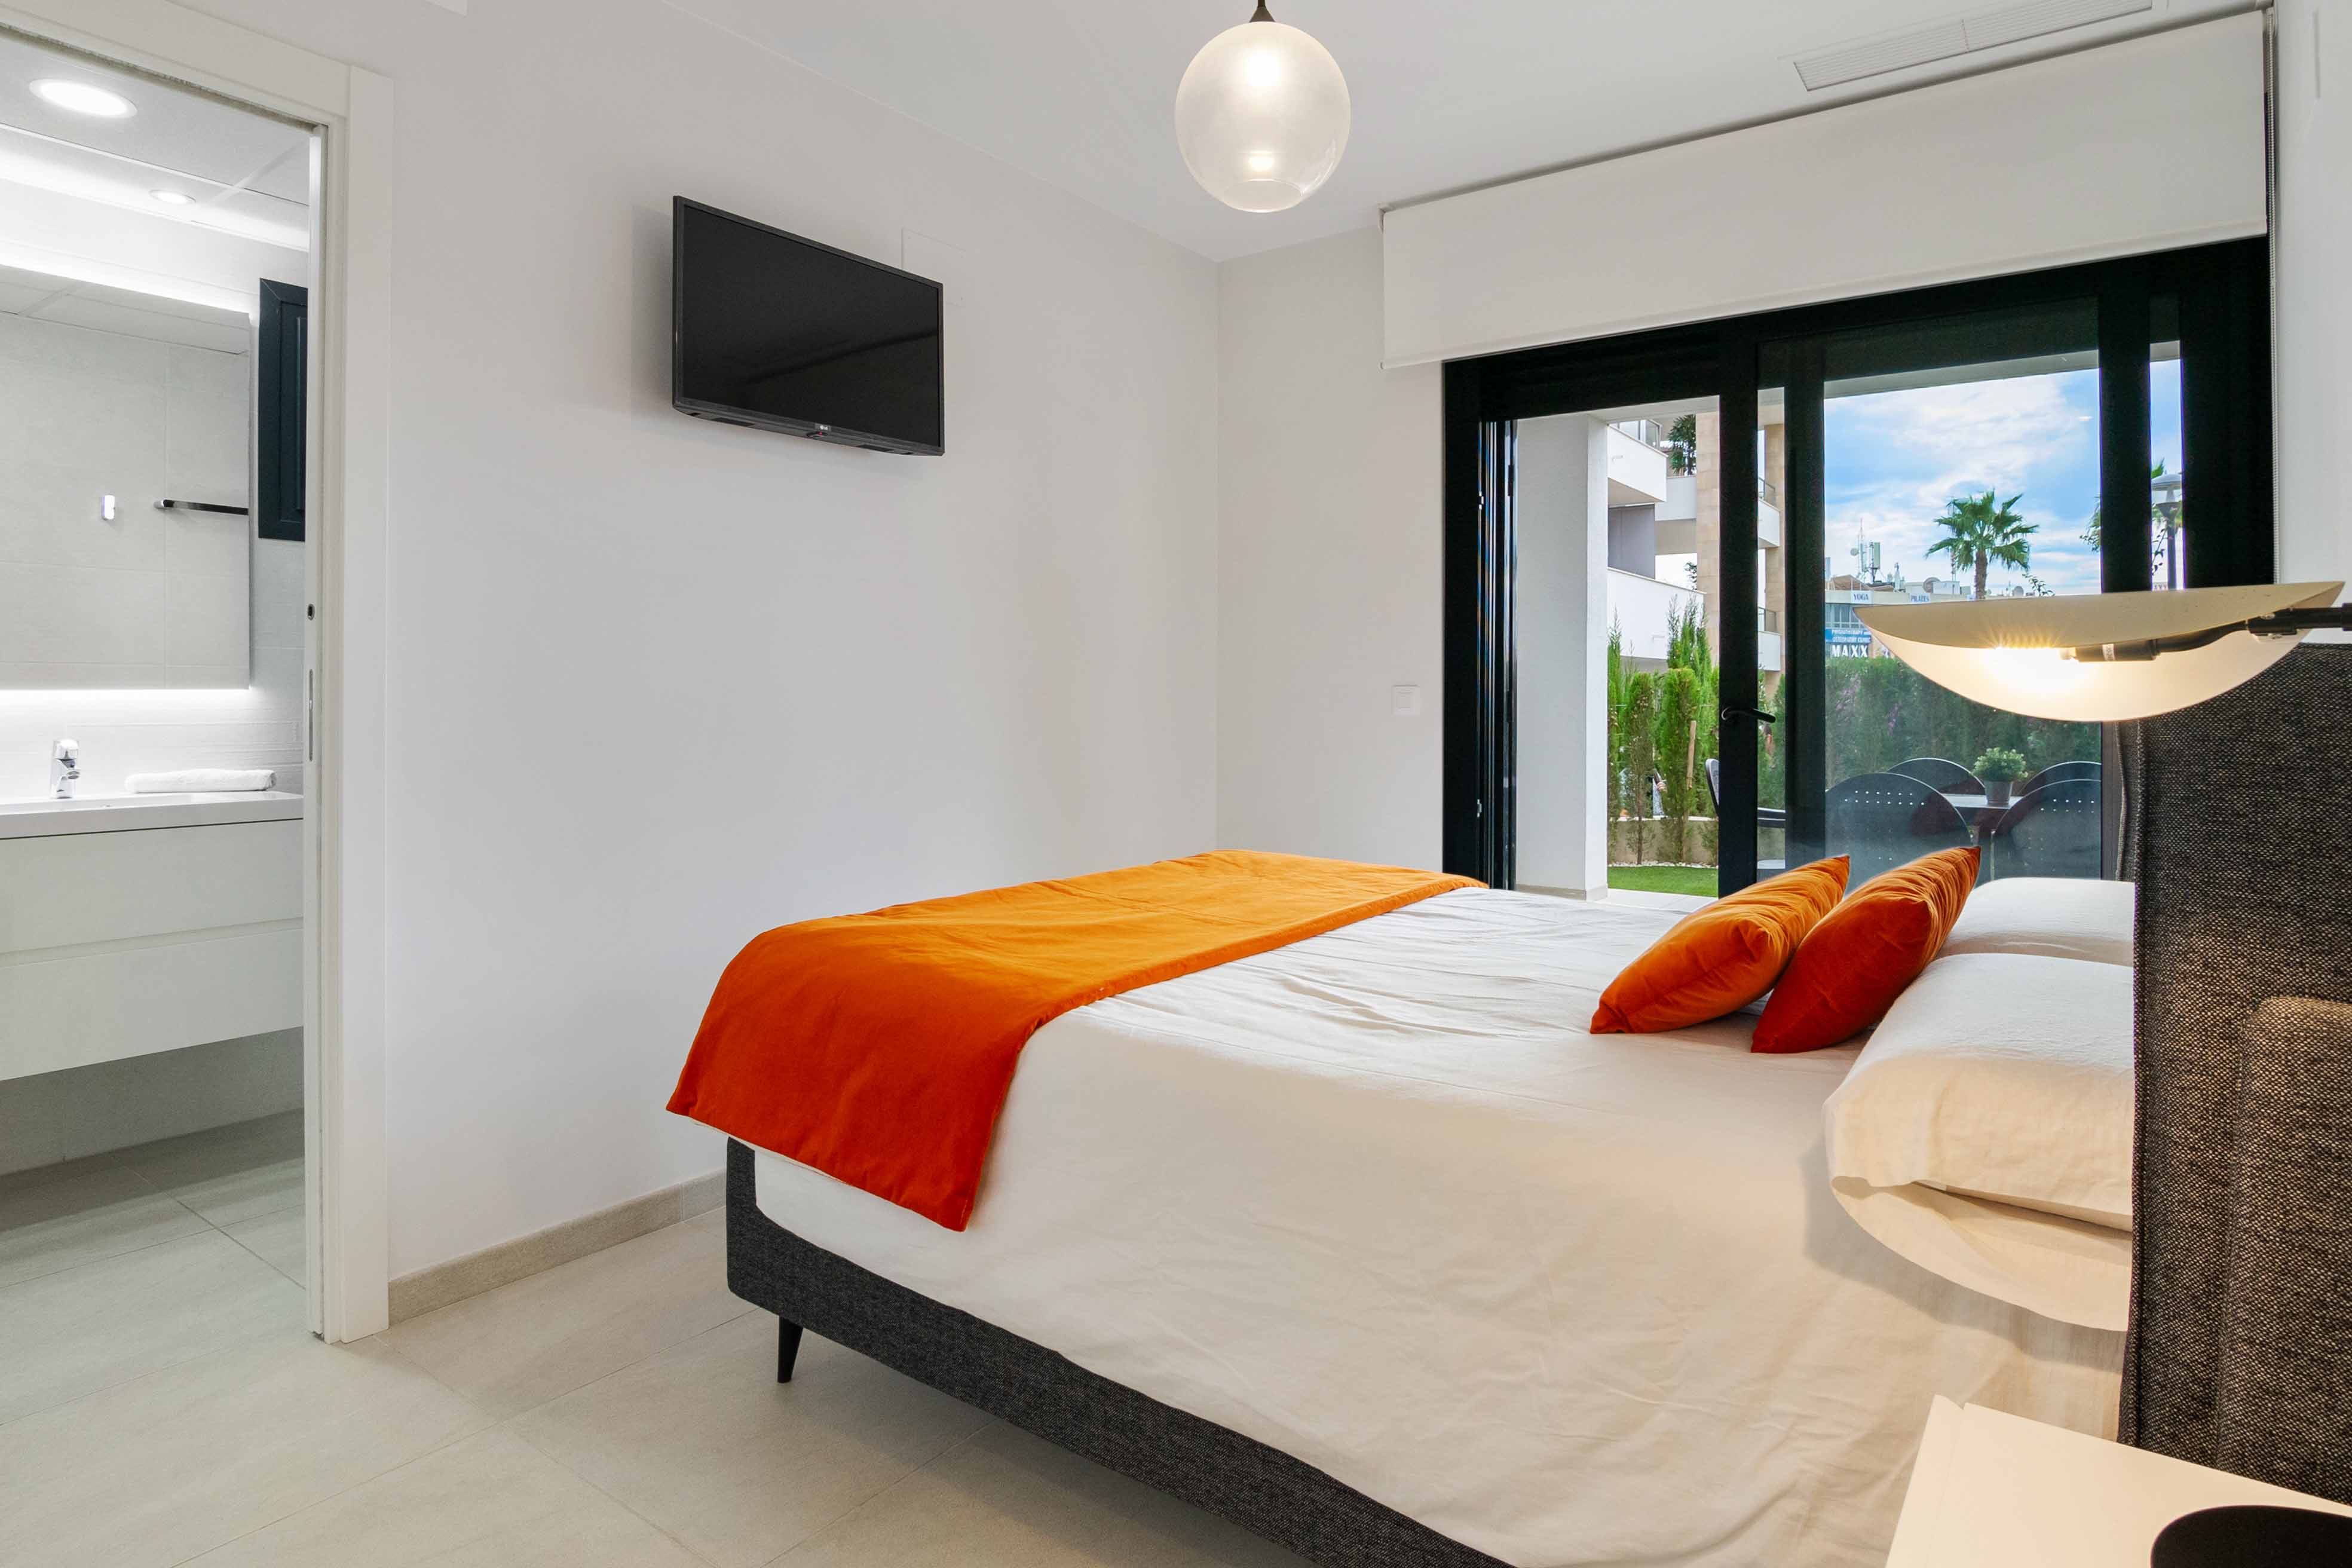 3405-03749. Luxury apartment in exclusive resdiential of Orihuela Costa (Alicante).